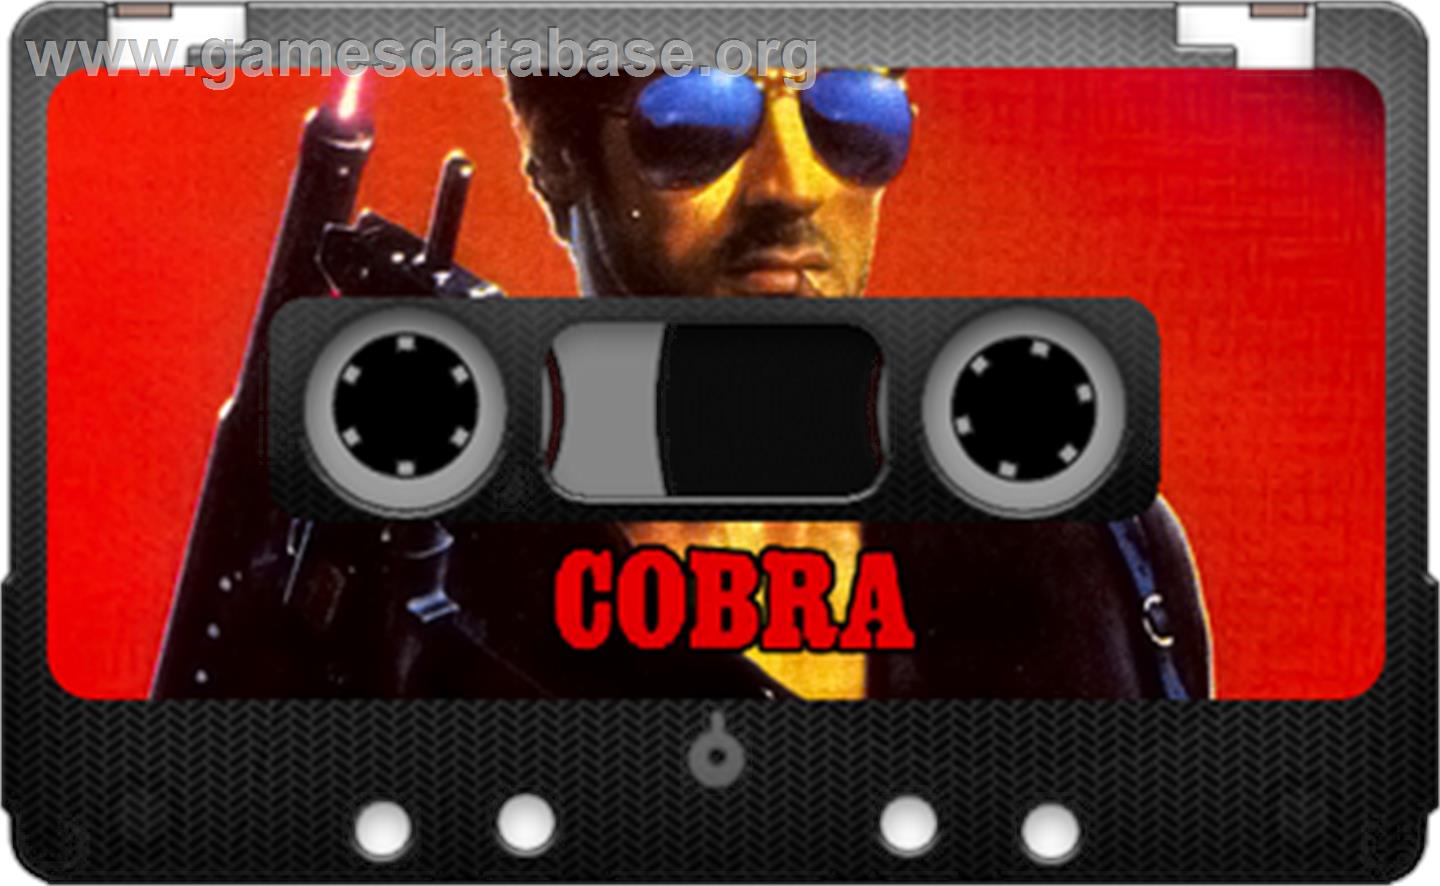 Cobra - Sinclair ZX Spectrum - Artwork - Cartridge